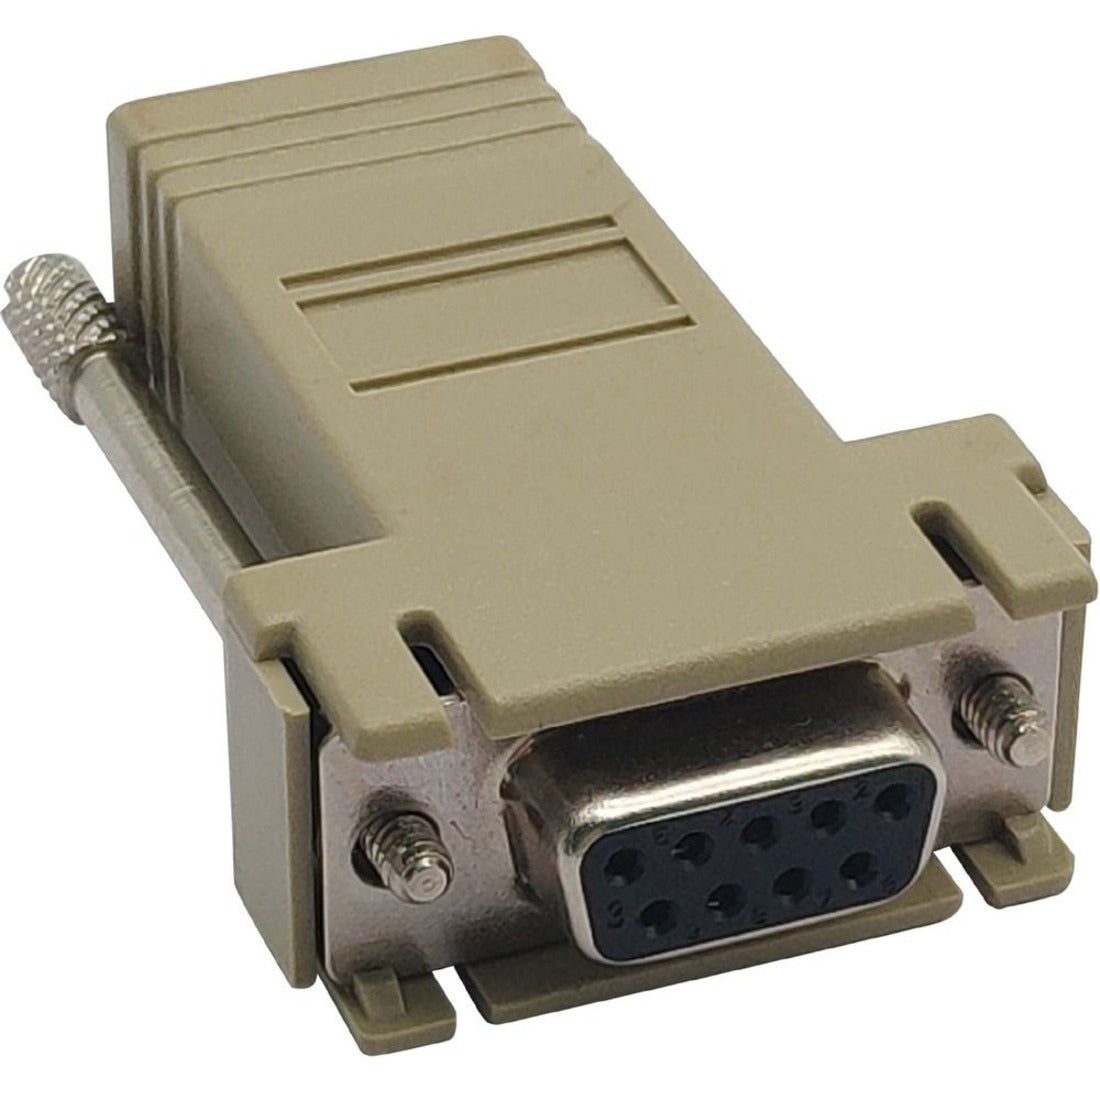 Tripp Lite B090-A9F Modular Adapter, Data Transfer Adapter for Console Servers